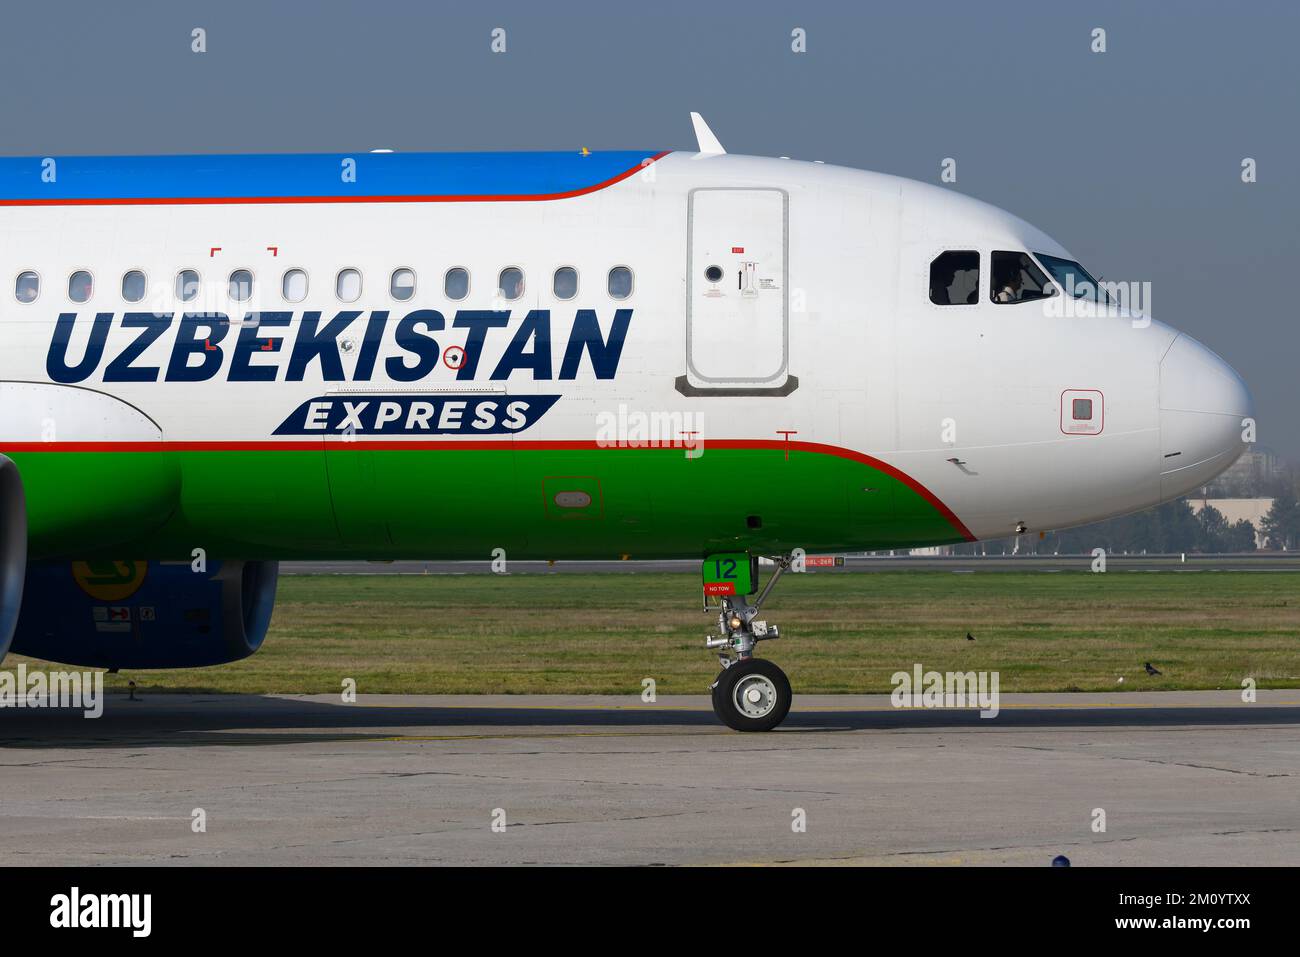 Uzbekistan Airways Express Airbus A320 aircraft taxiing at Tashkent Airport in Uzbekistan. Airplane of Uzbekistan Express. Plane registered as UK32012 Stock Photo